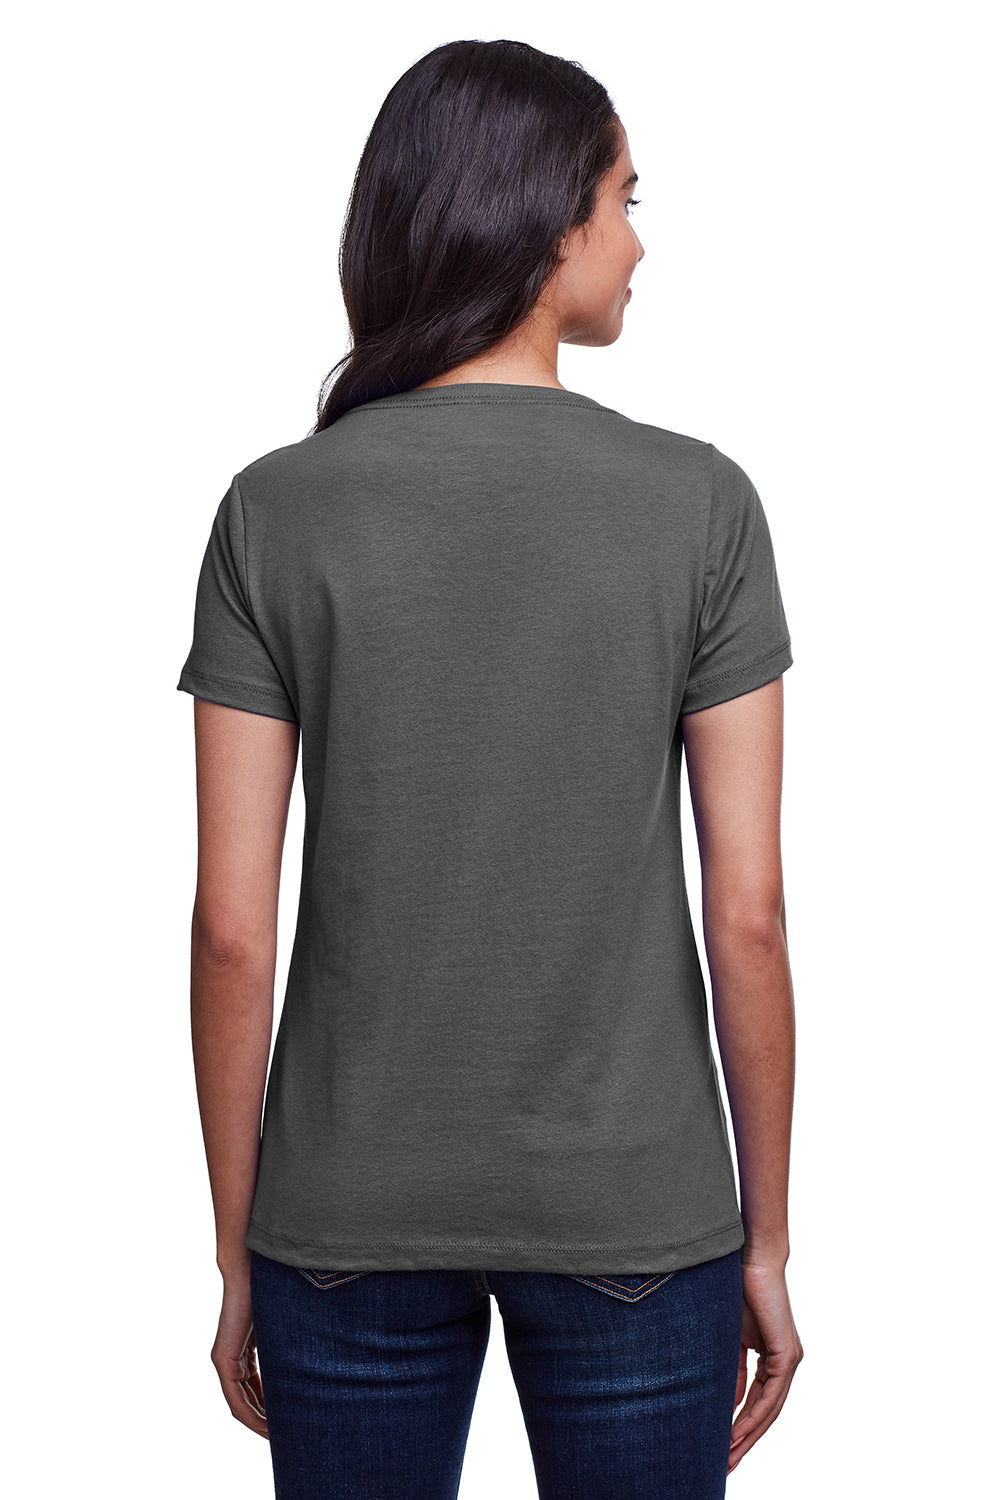 Next Level N4240 Womens Eco Performance Moisture Wicking Short Sleeve V-Neck T-Shirt Heavy Metal Grey Back